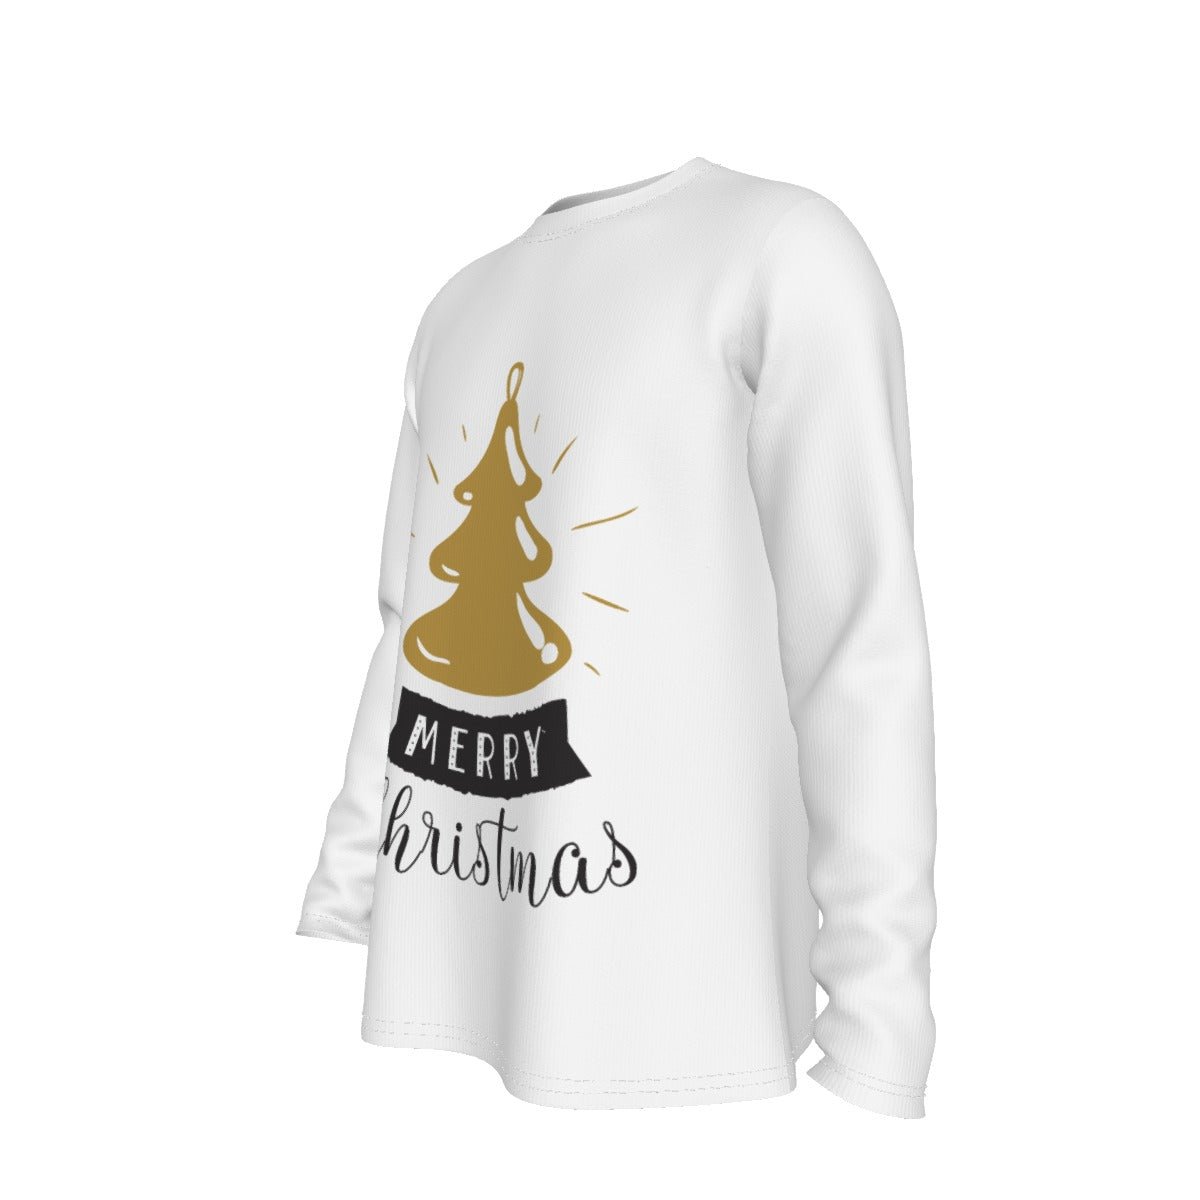 Men's Long Sleeve Christmas T-Shirt - Merry Christmas - Gold Tree - Festive Style